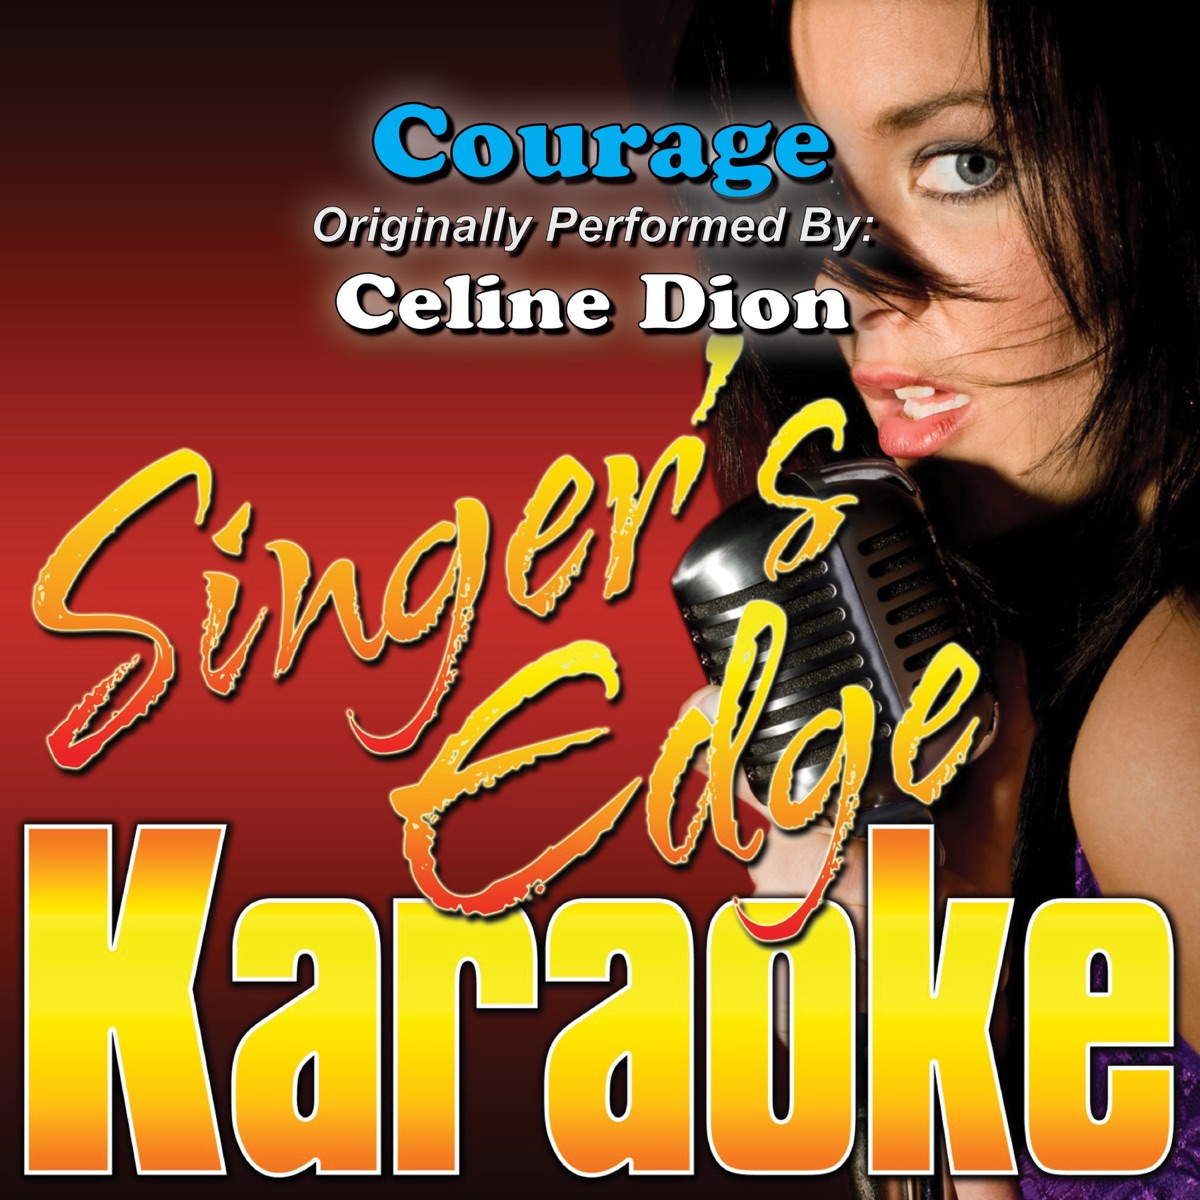 Courage (Originally Performed by Celine Dion) [Karaoke Version] - Single by  Singer's Edge Karaoke on Apple Music